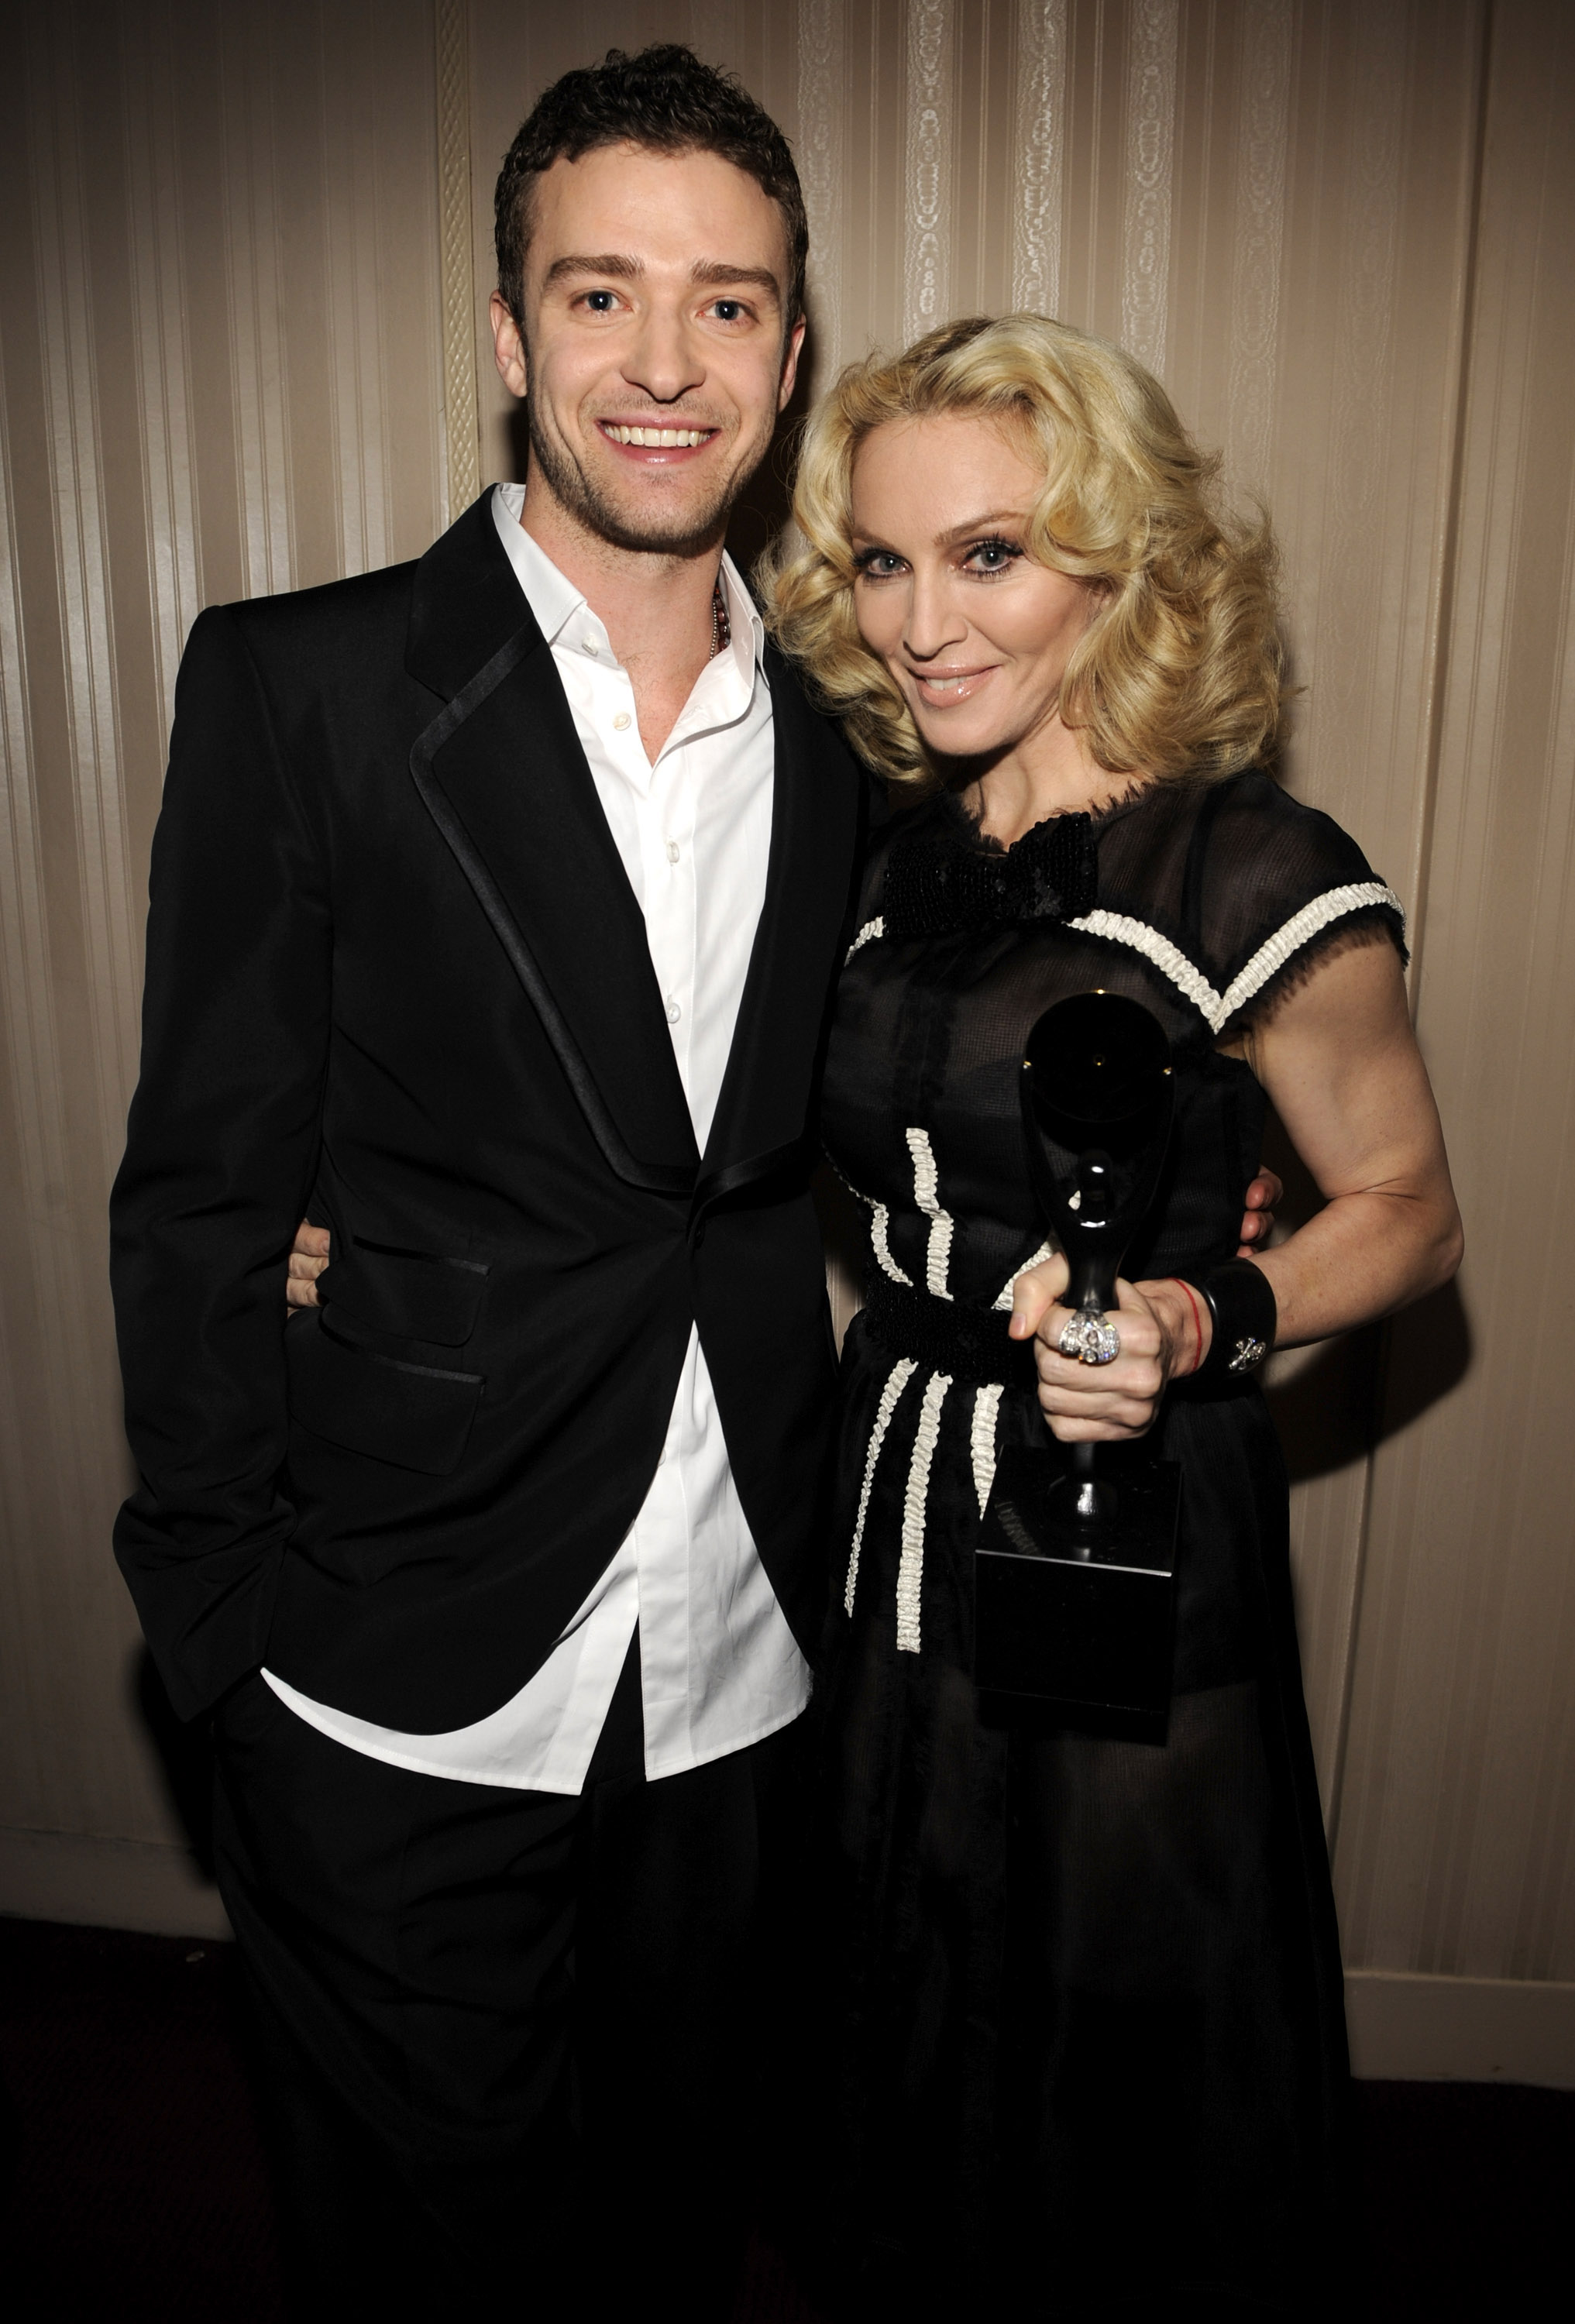 Madonna and Justin Timberlake